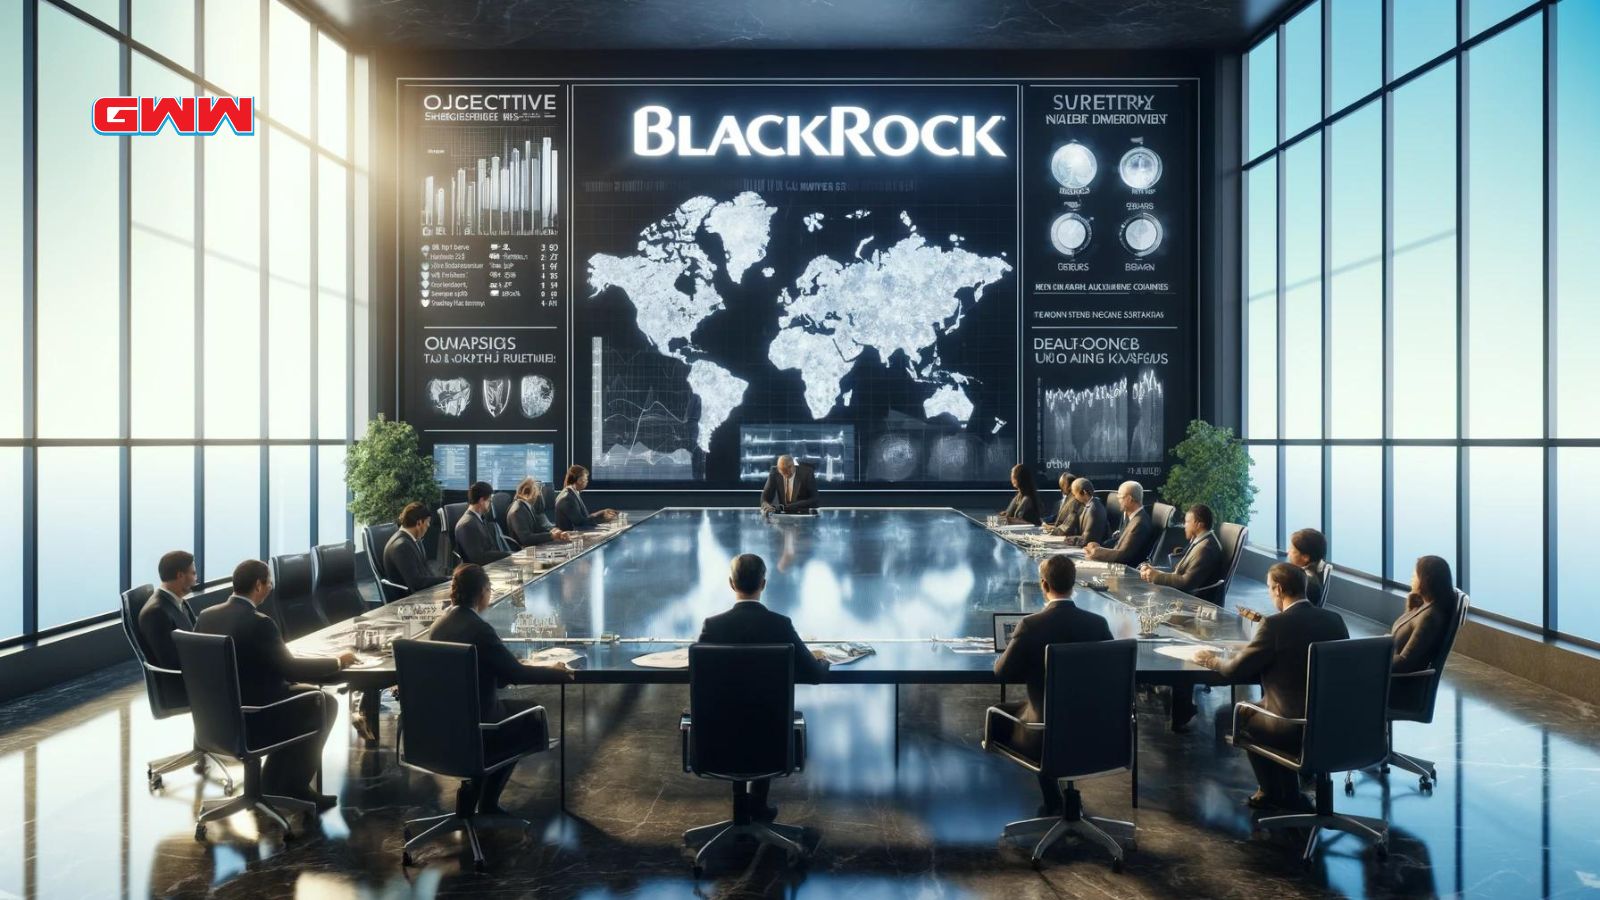 BlackRock strategy session in modern office setting